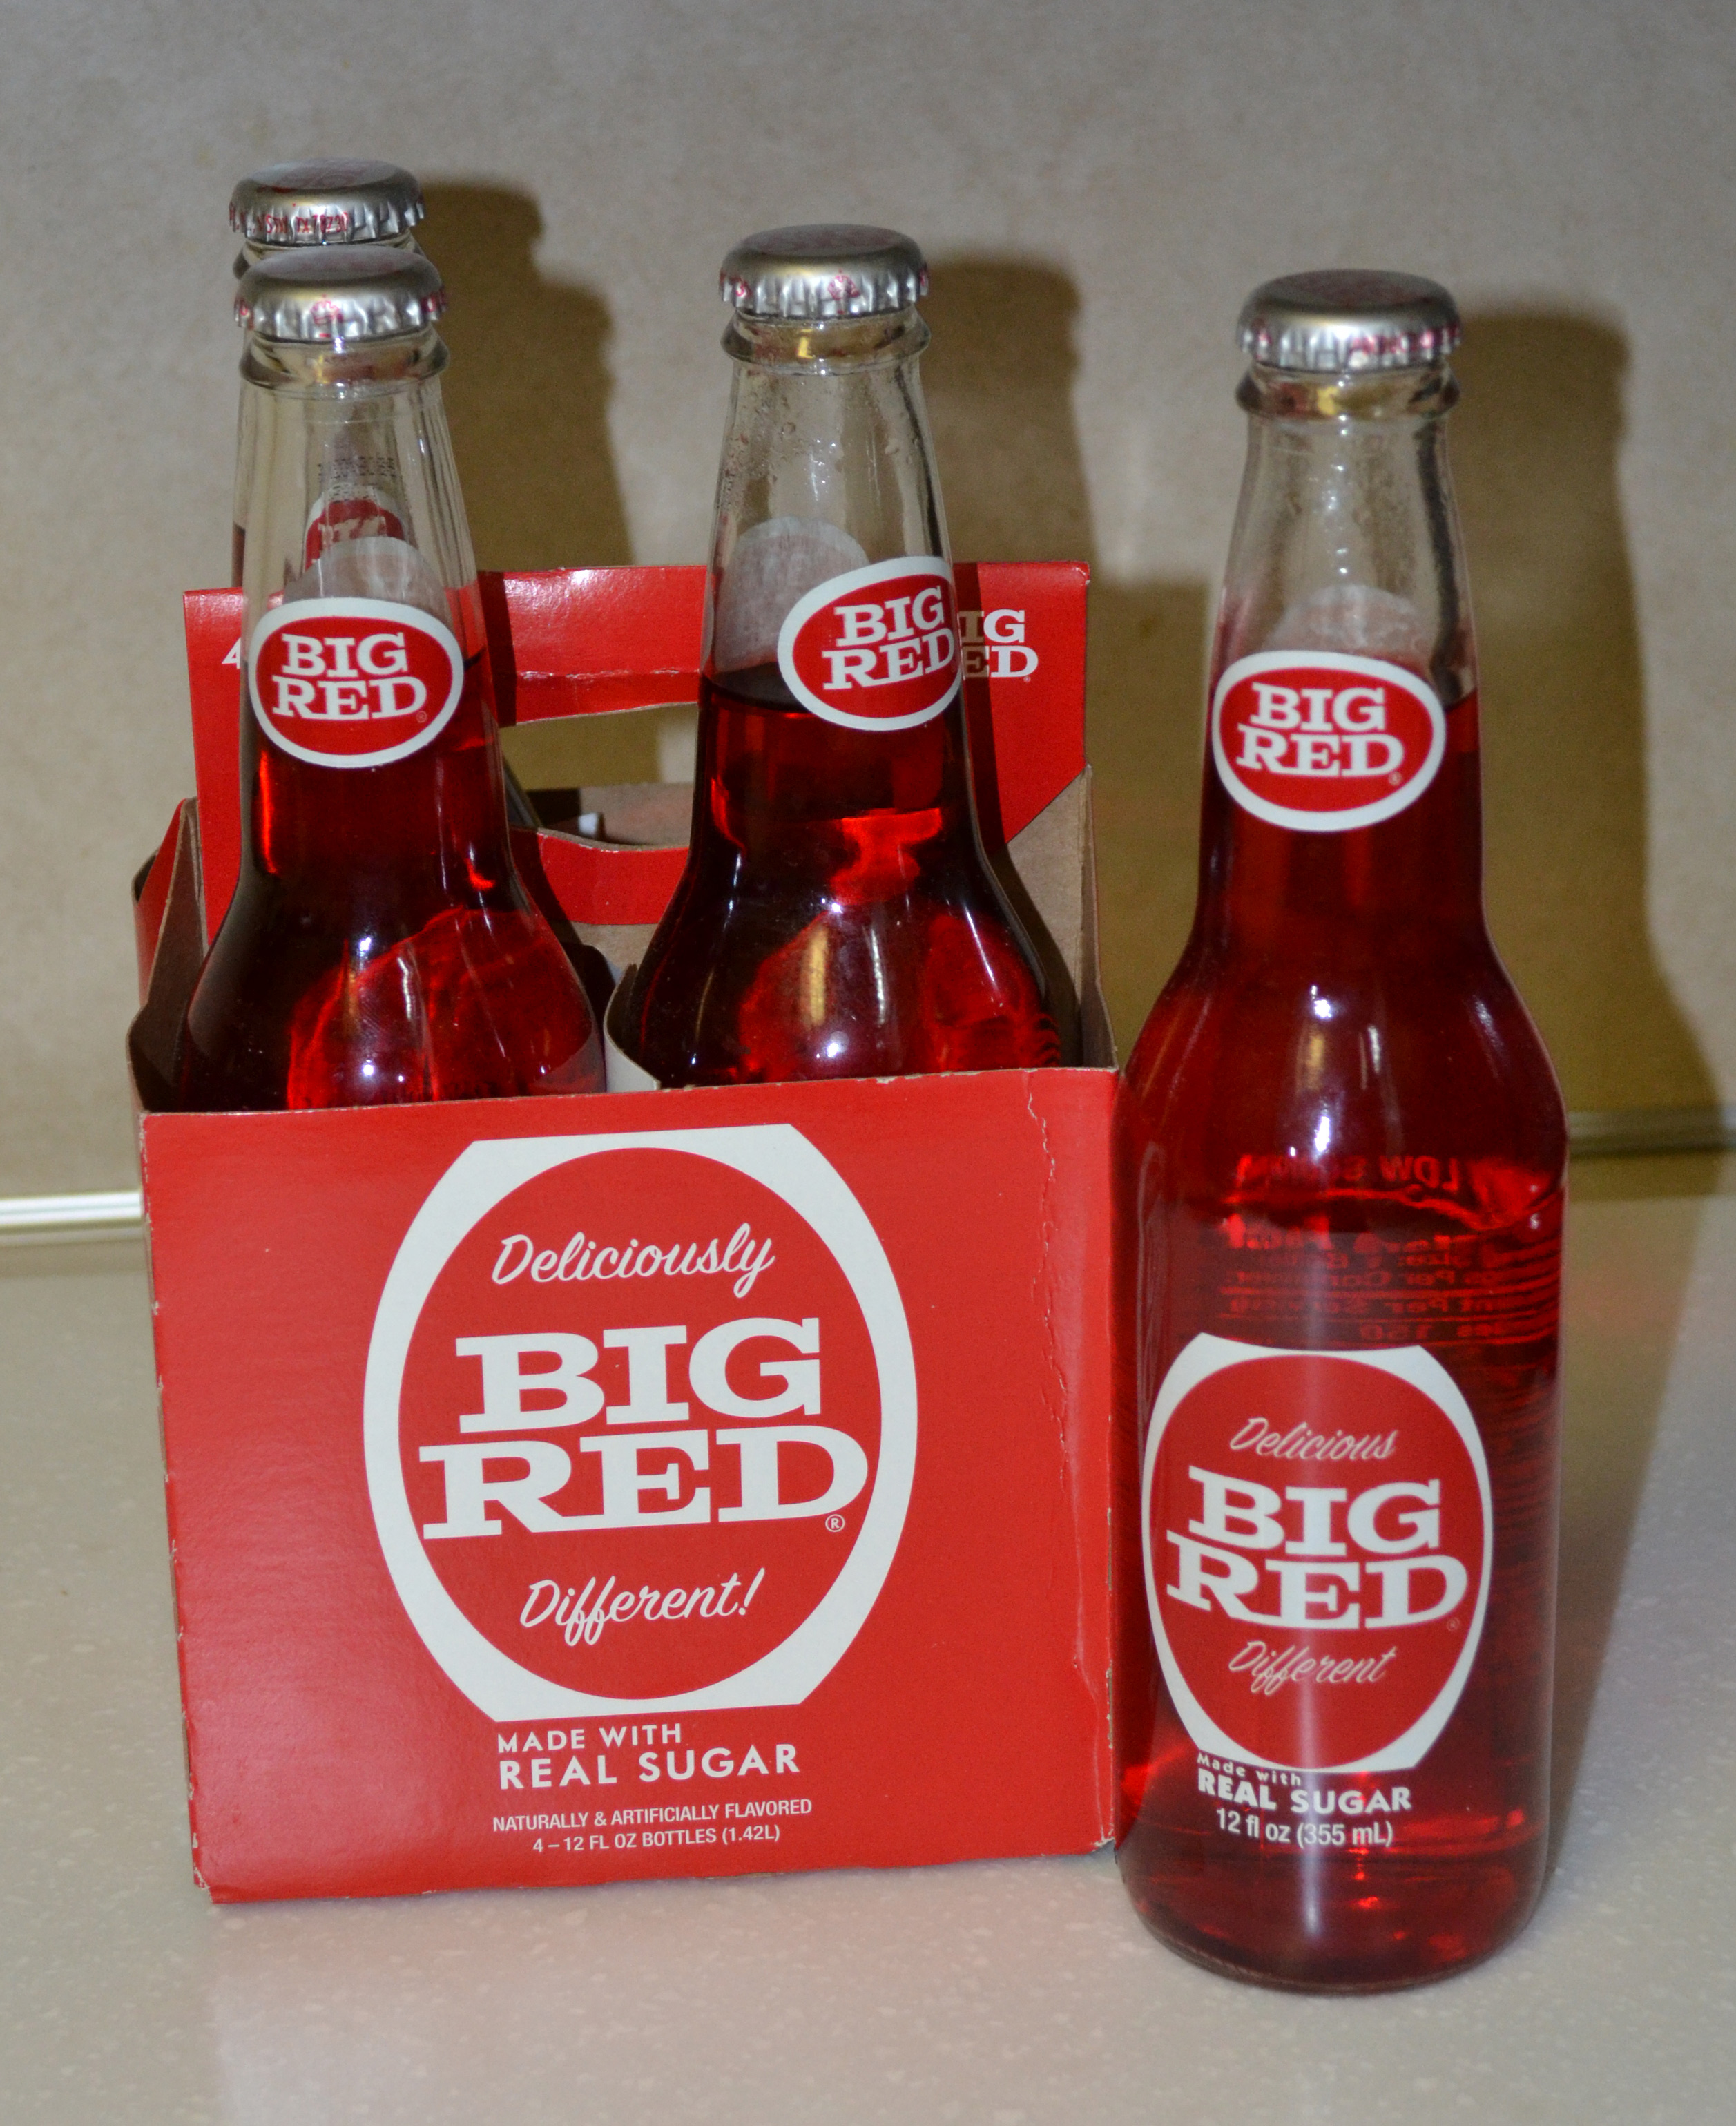 Big Red (drink) - Wikipedia